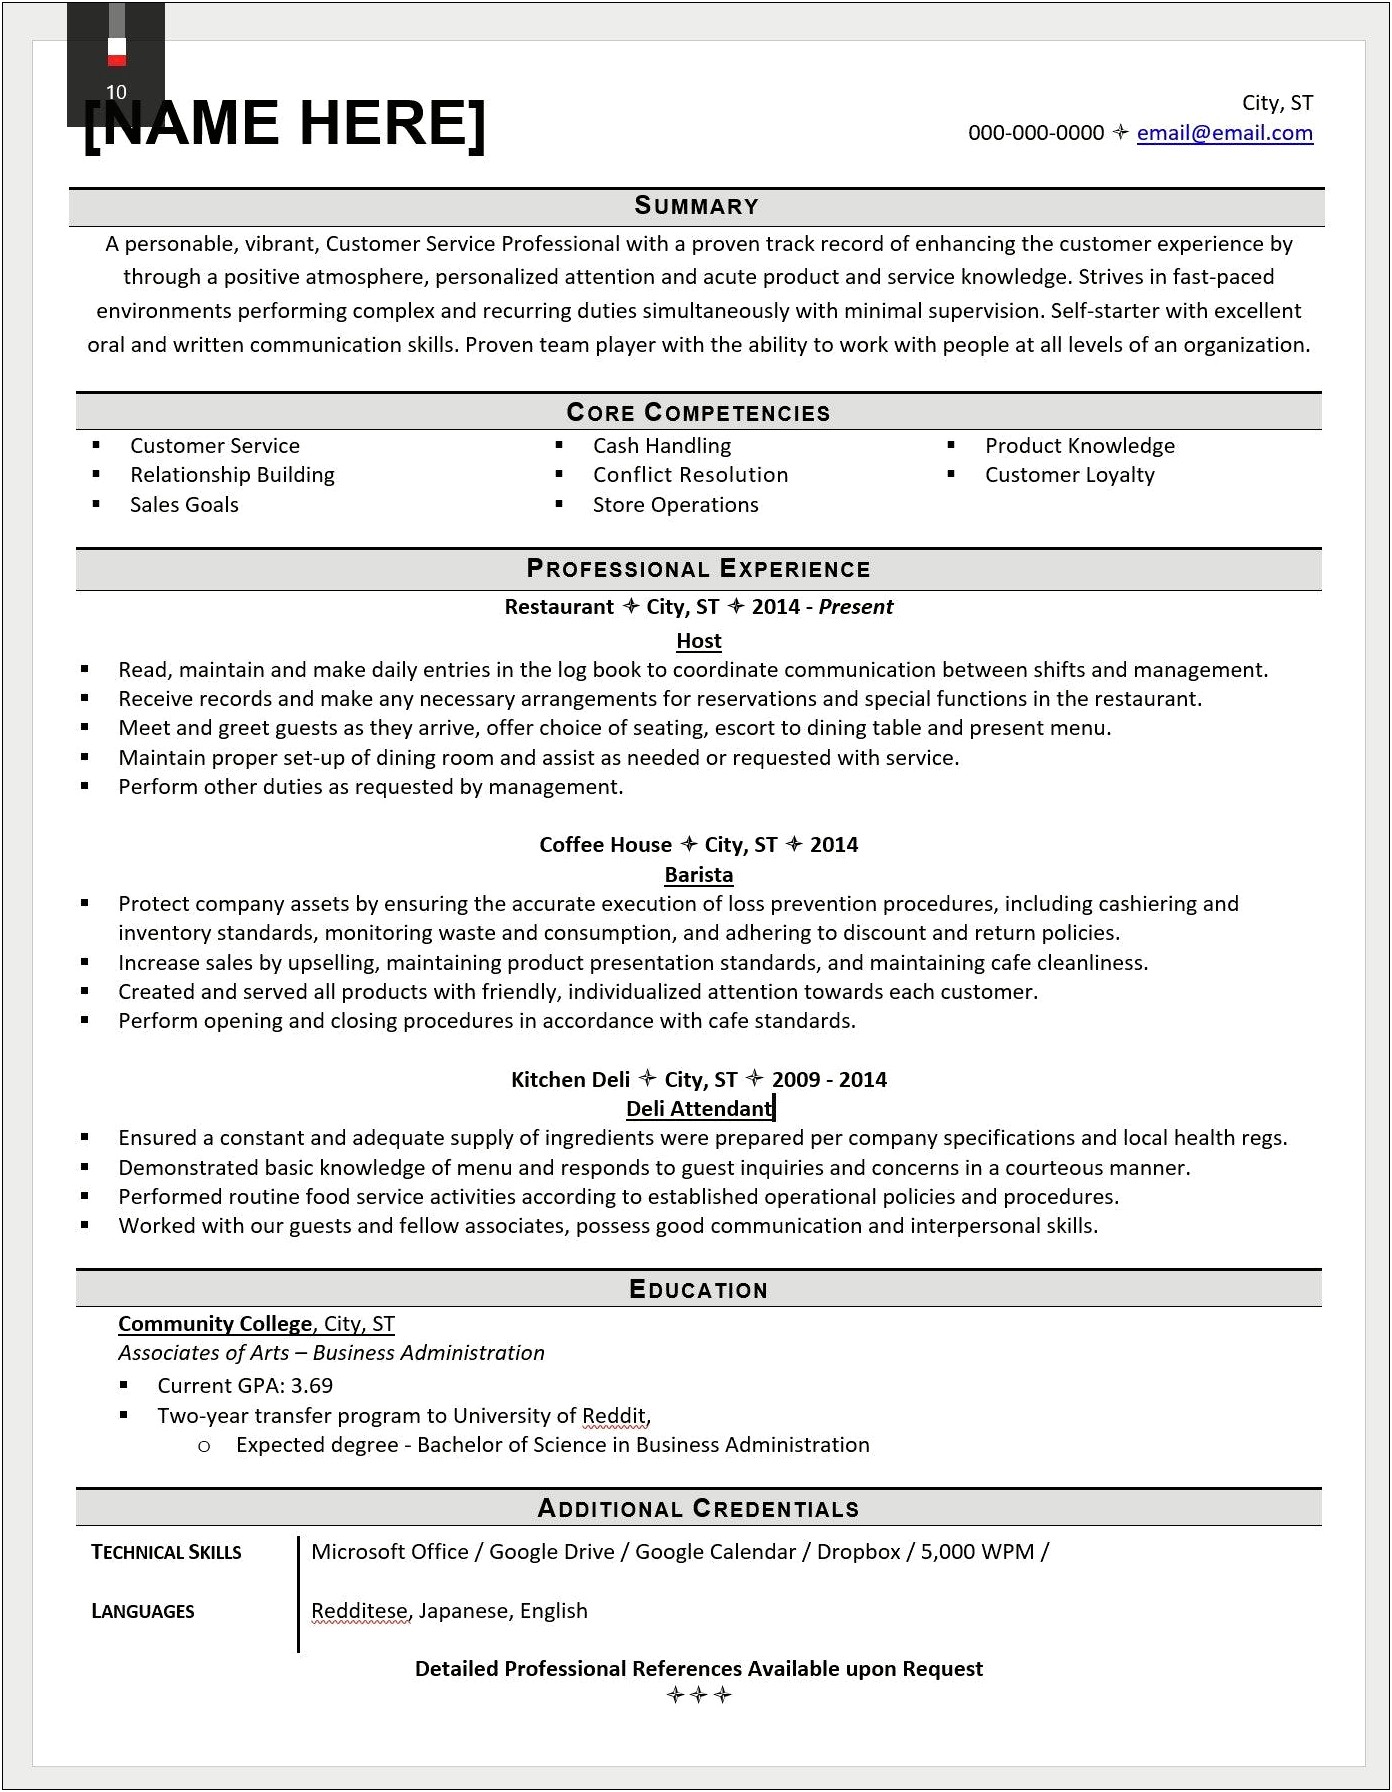 Resume Bank Teller Job Description